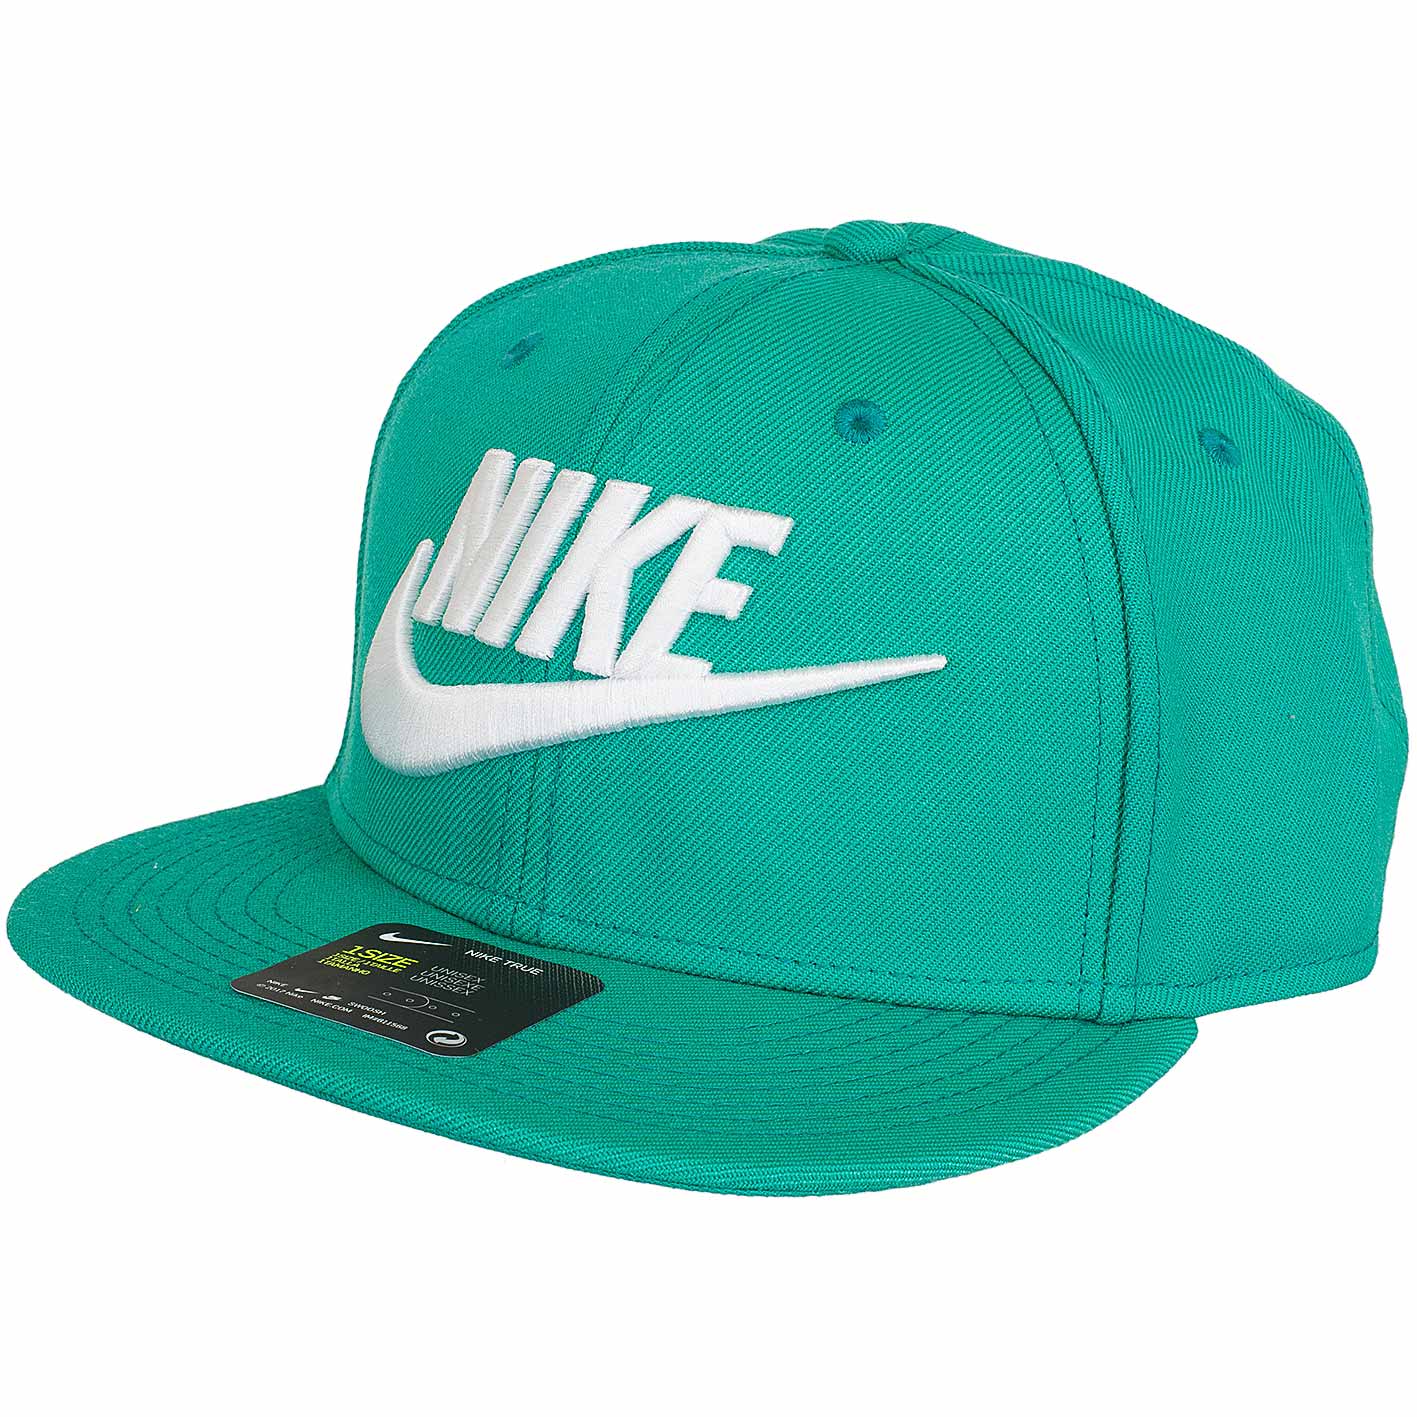 ☆ Nike Snapback Cap Futura True 2 grün/weiß - hier bestellen!